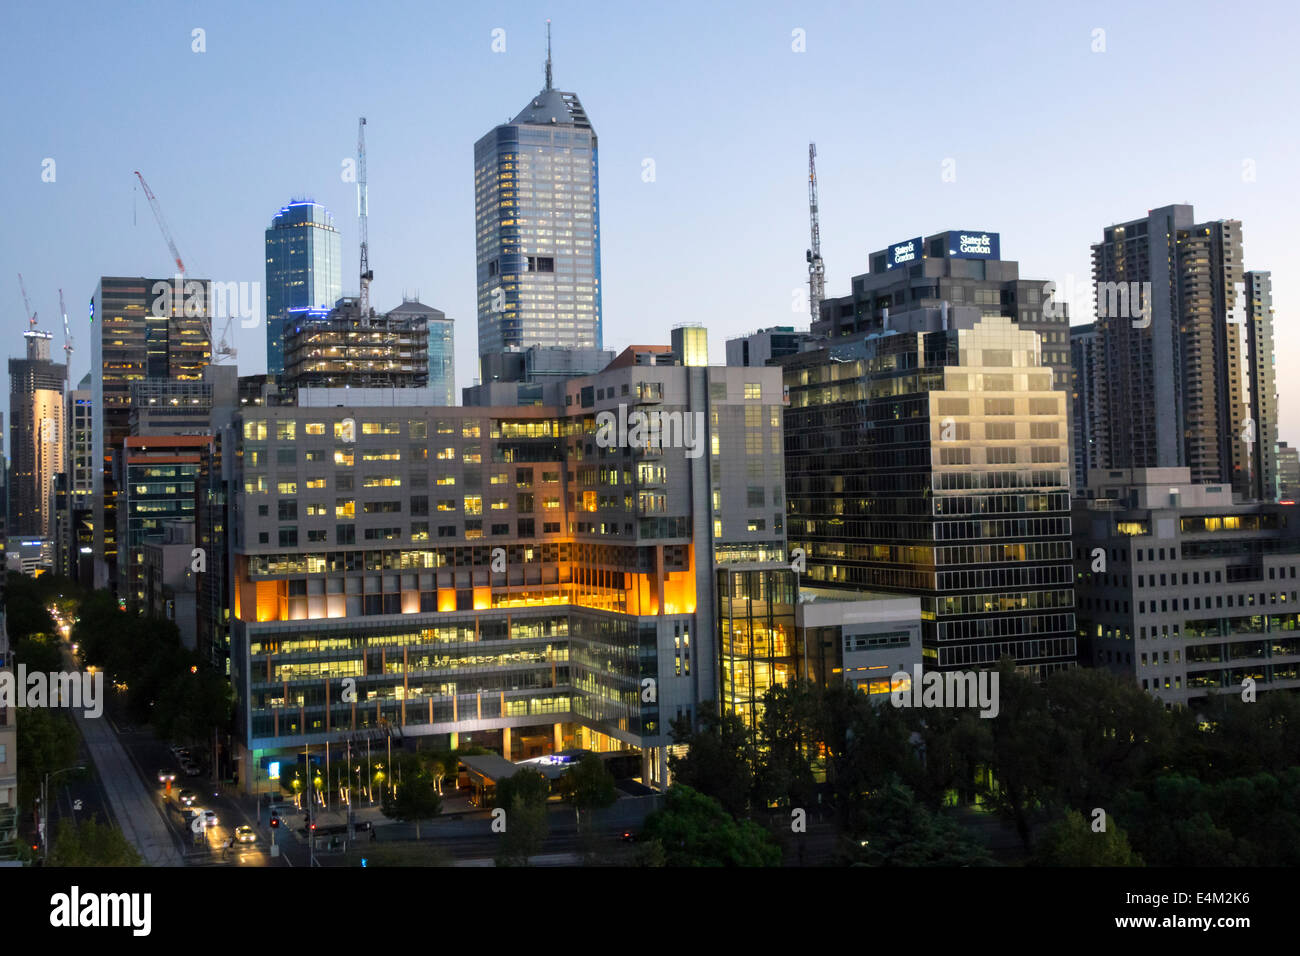 Melbourne Australia,William Street,dusk,evening,night,high rise,buildings,skyscrapers,city skyline,construction cranes,AU140318173 Stock Photo